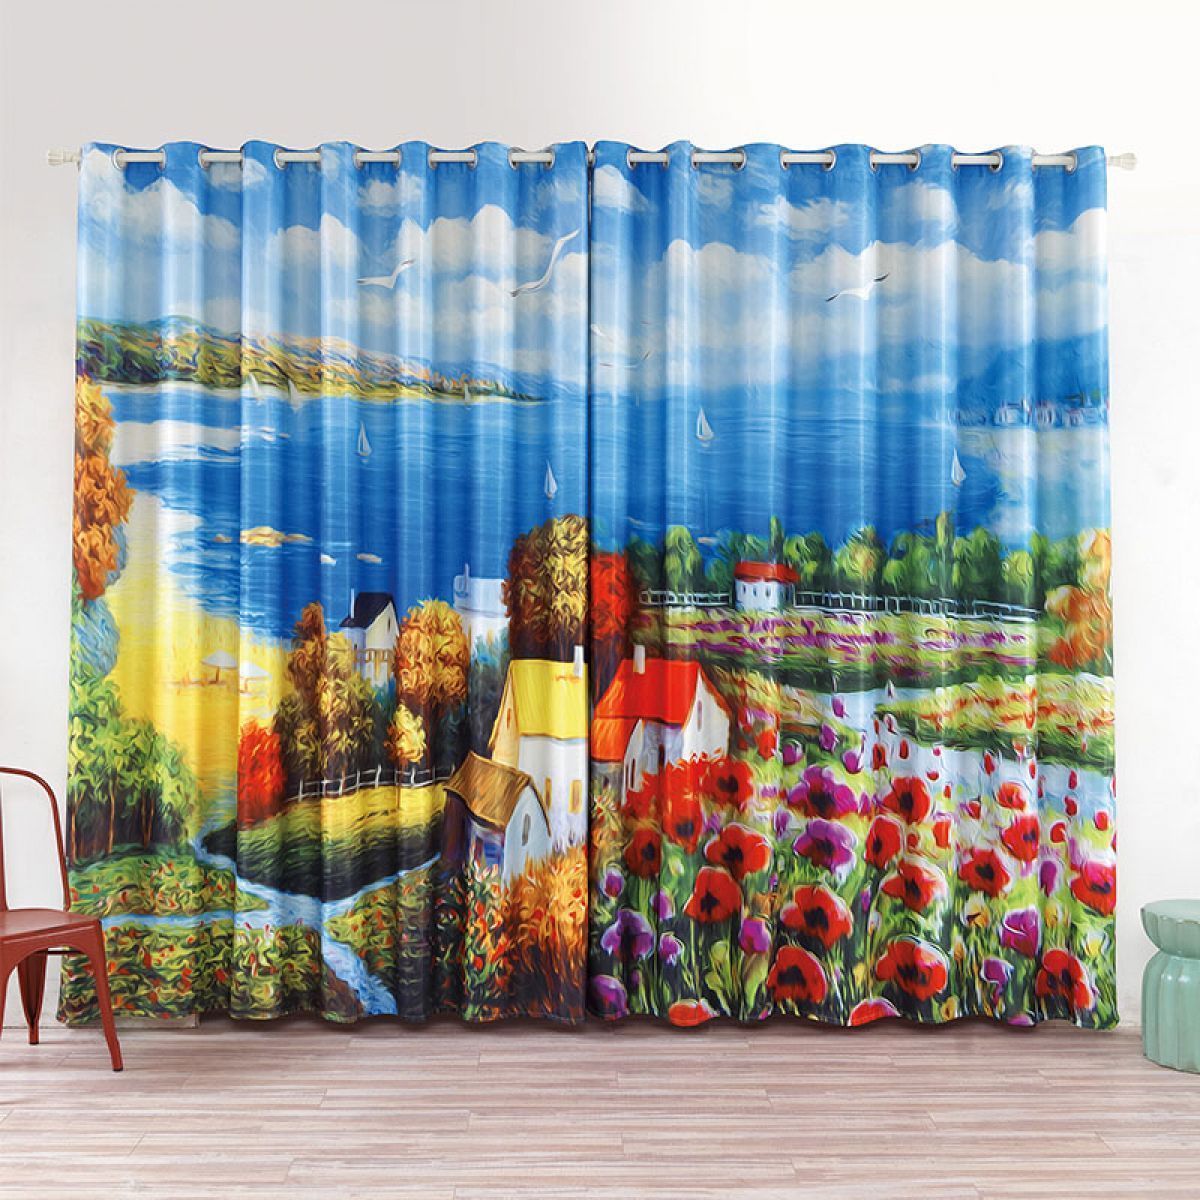 seaside and house printed window curtain home decor 5830